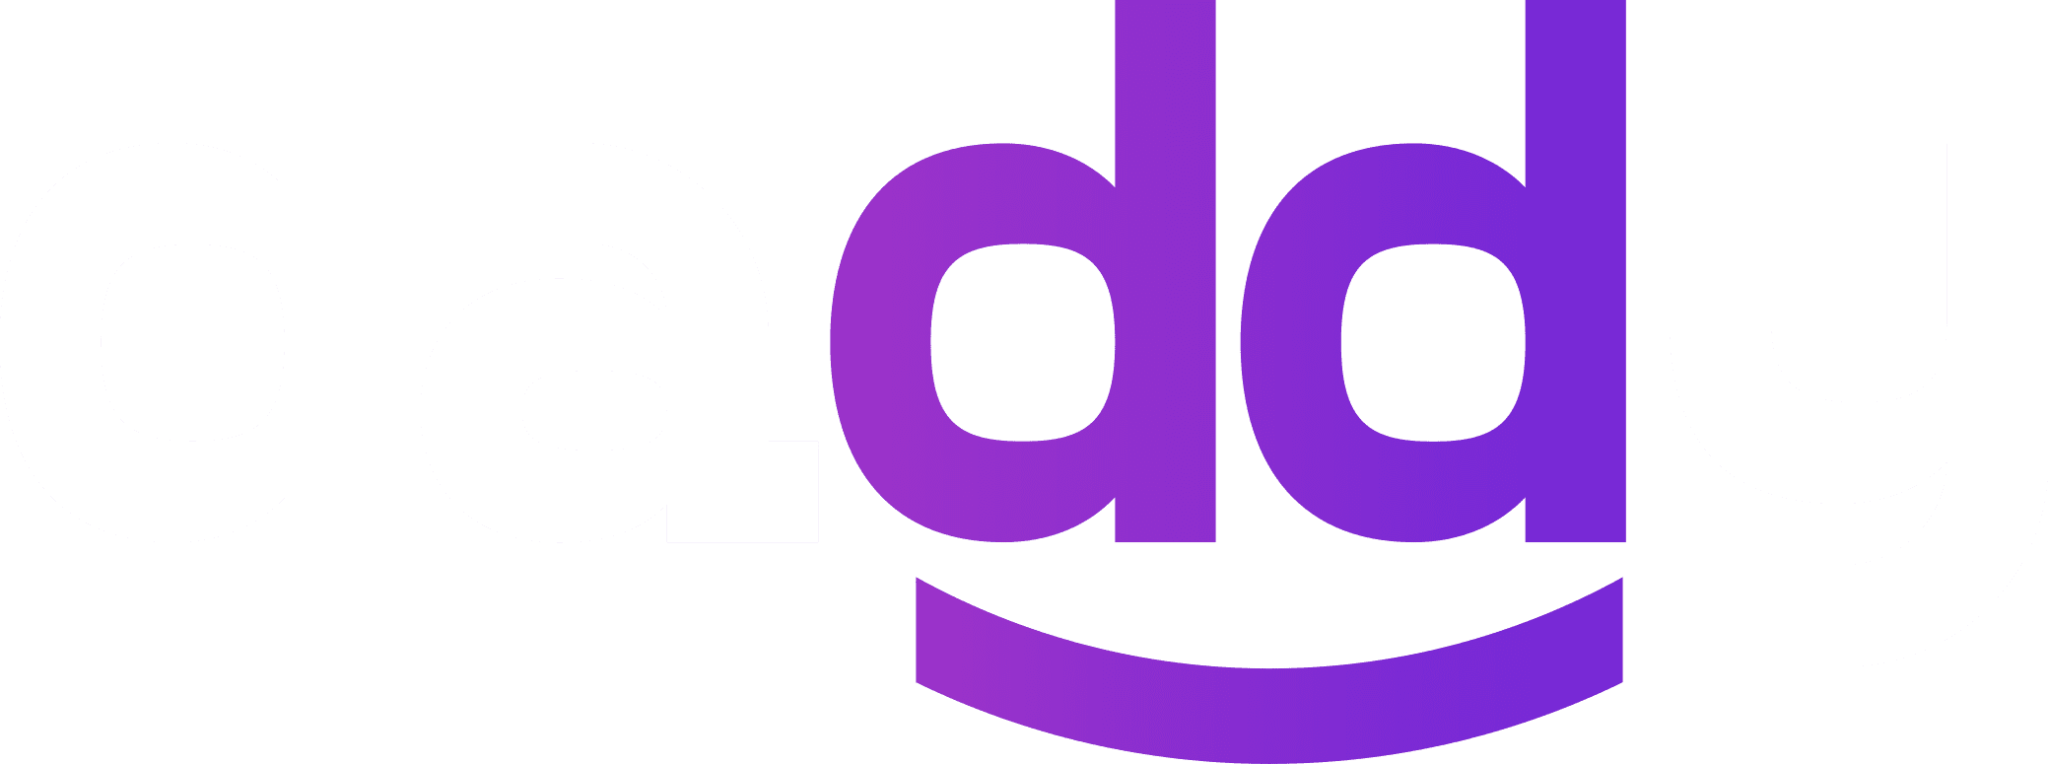 Daddy Casino логотип